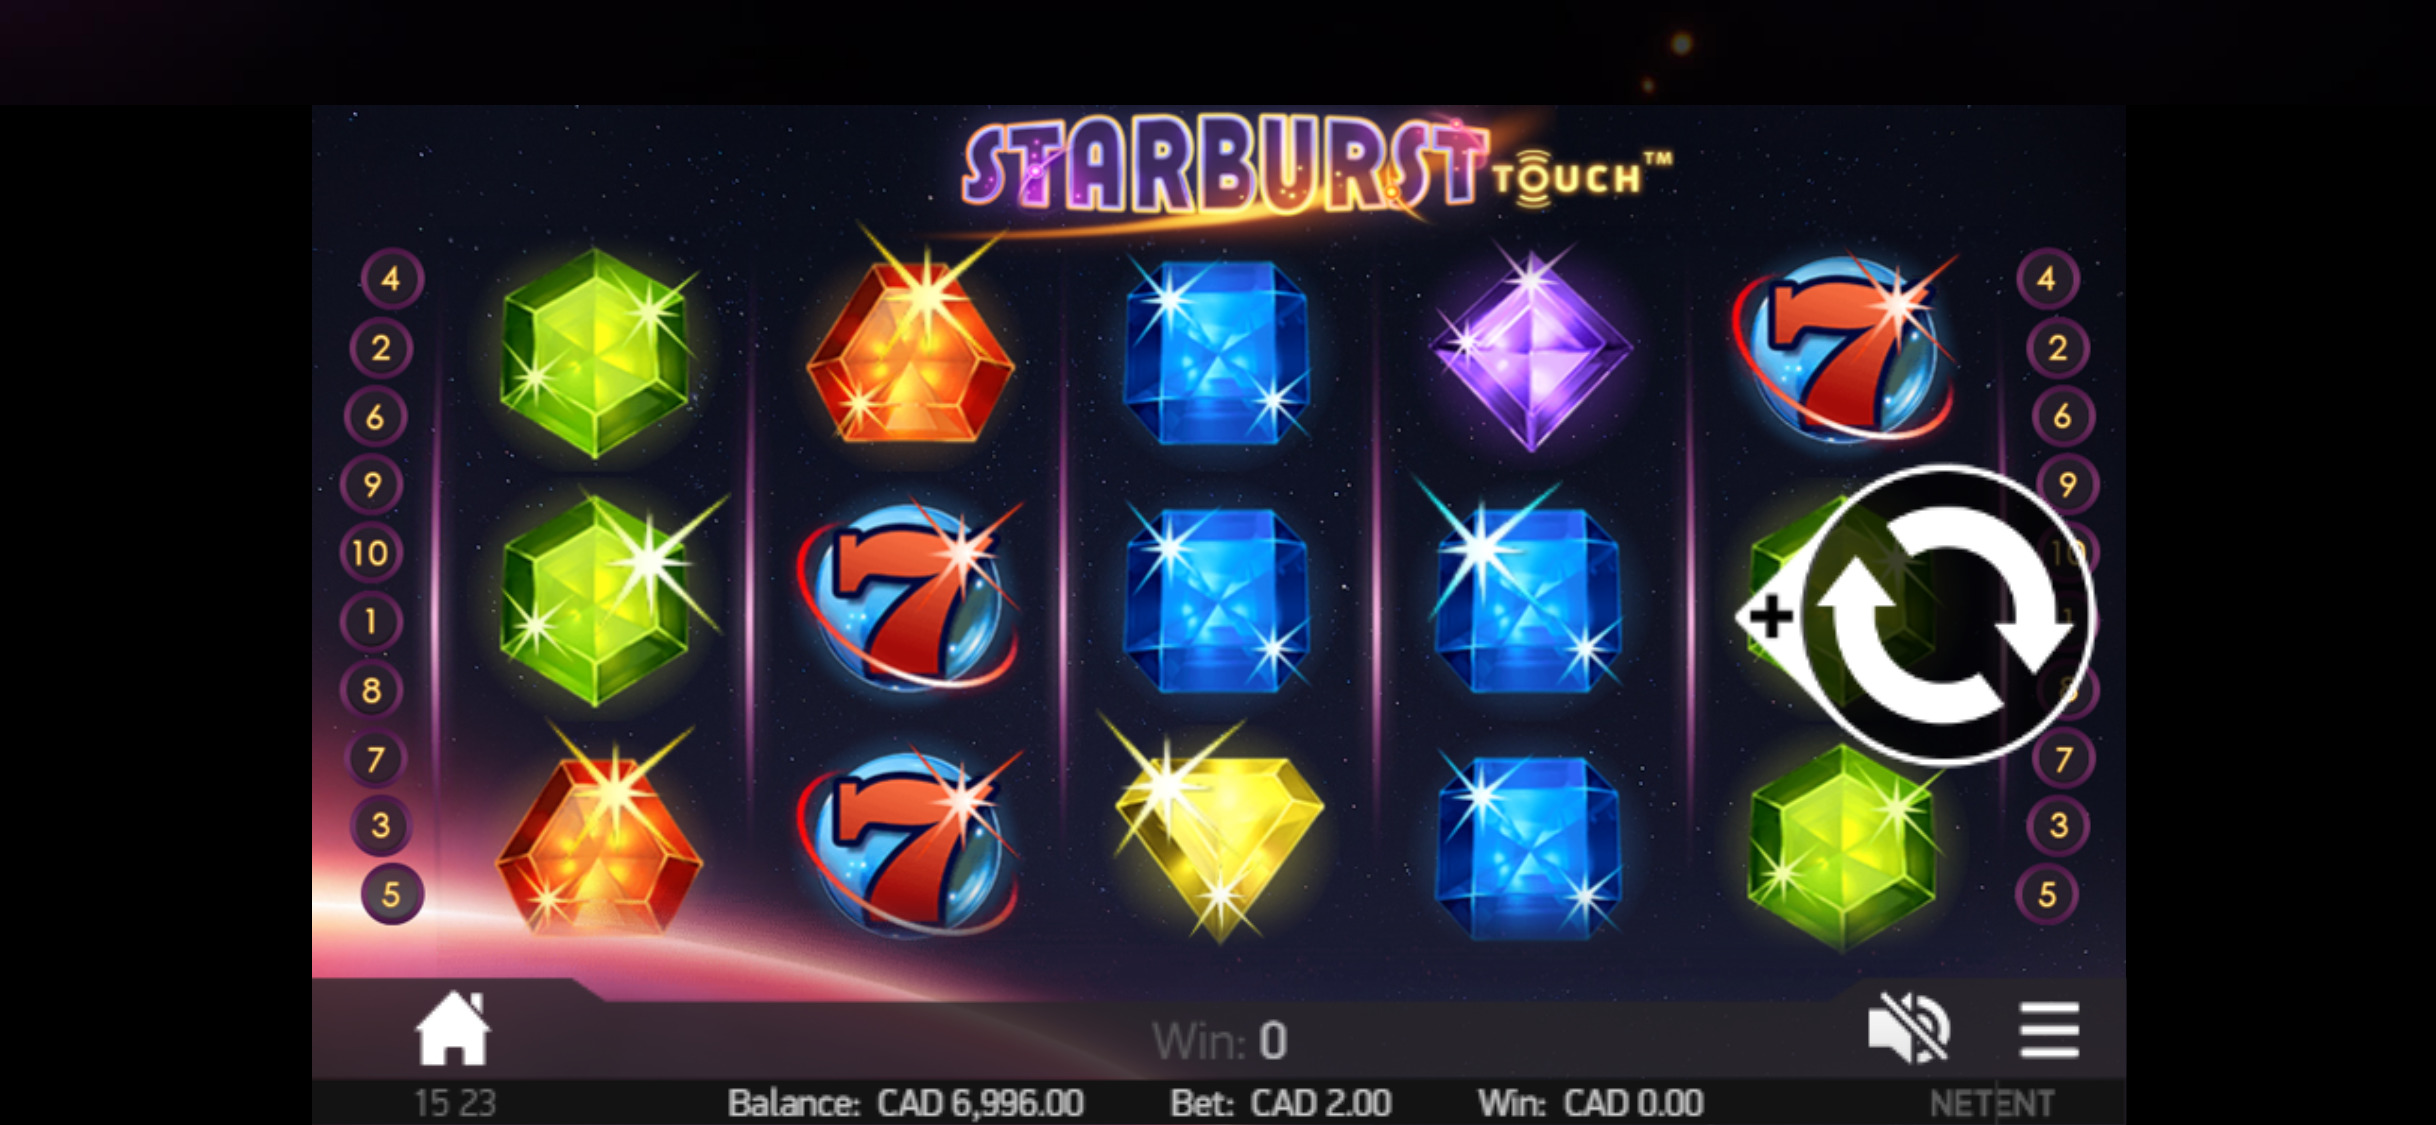 Next Casino Mobile Slot Games Review